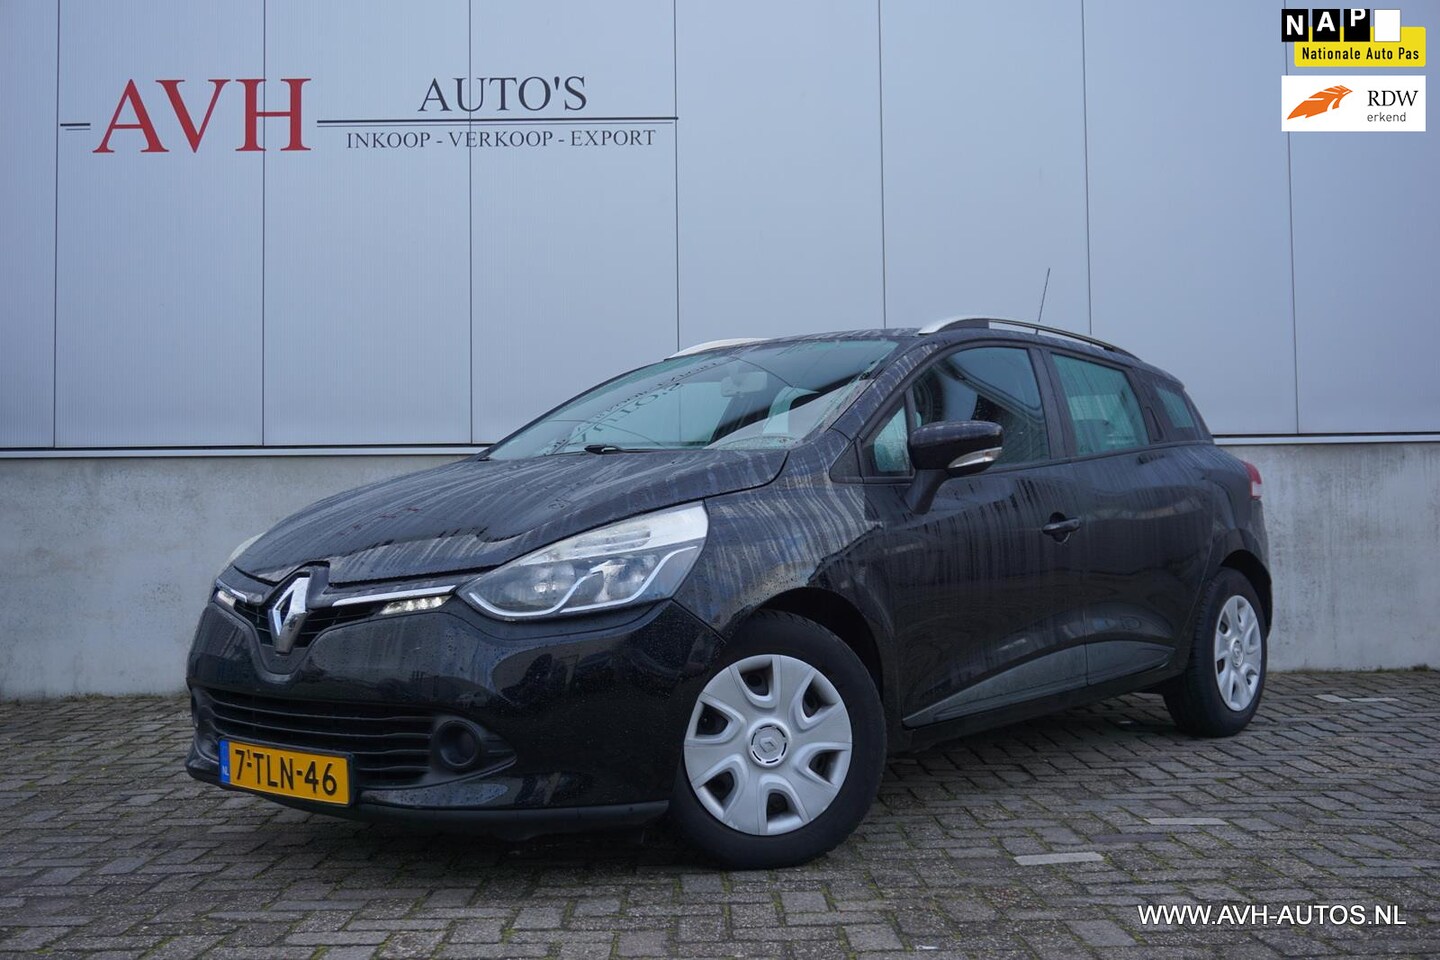 erectie pond Numeriek Renault Clio Estate 1.5 dCi ECO Expression 2014 Diesel - Occasion te koop  op AutoWereld.nl